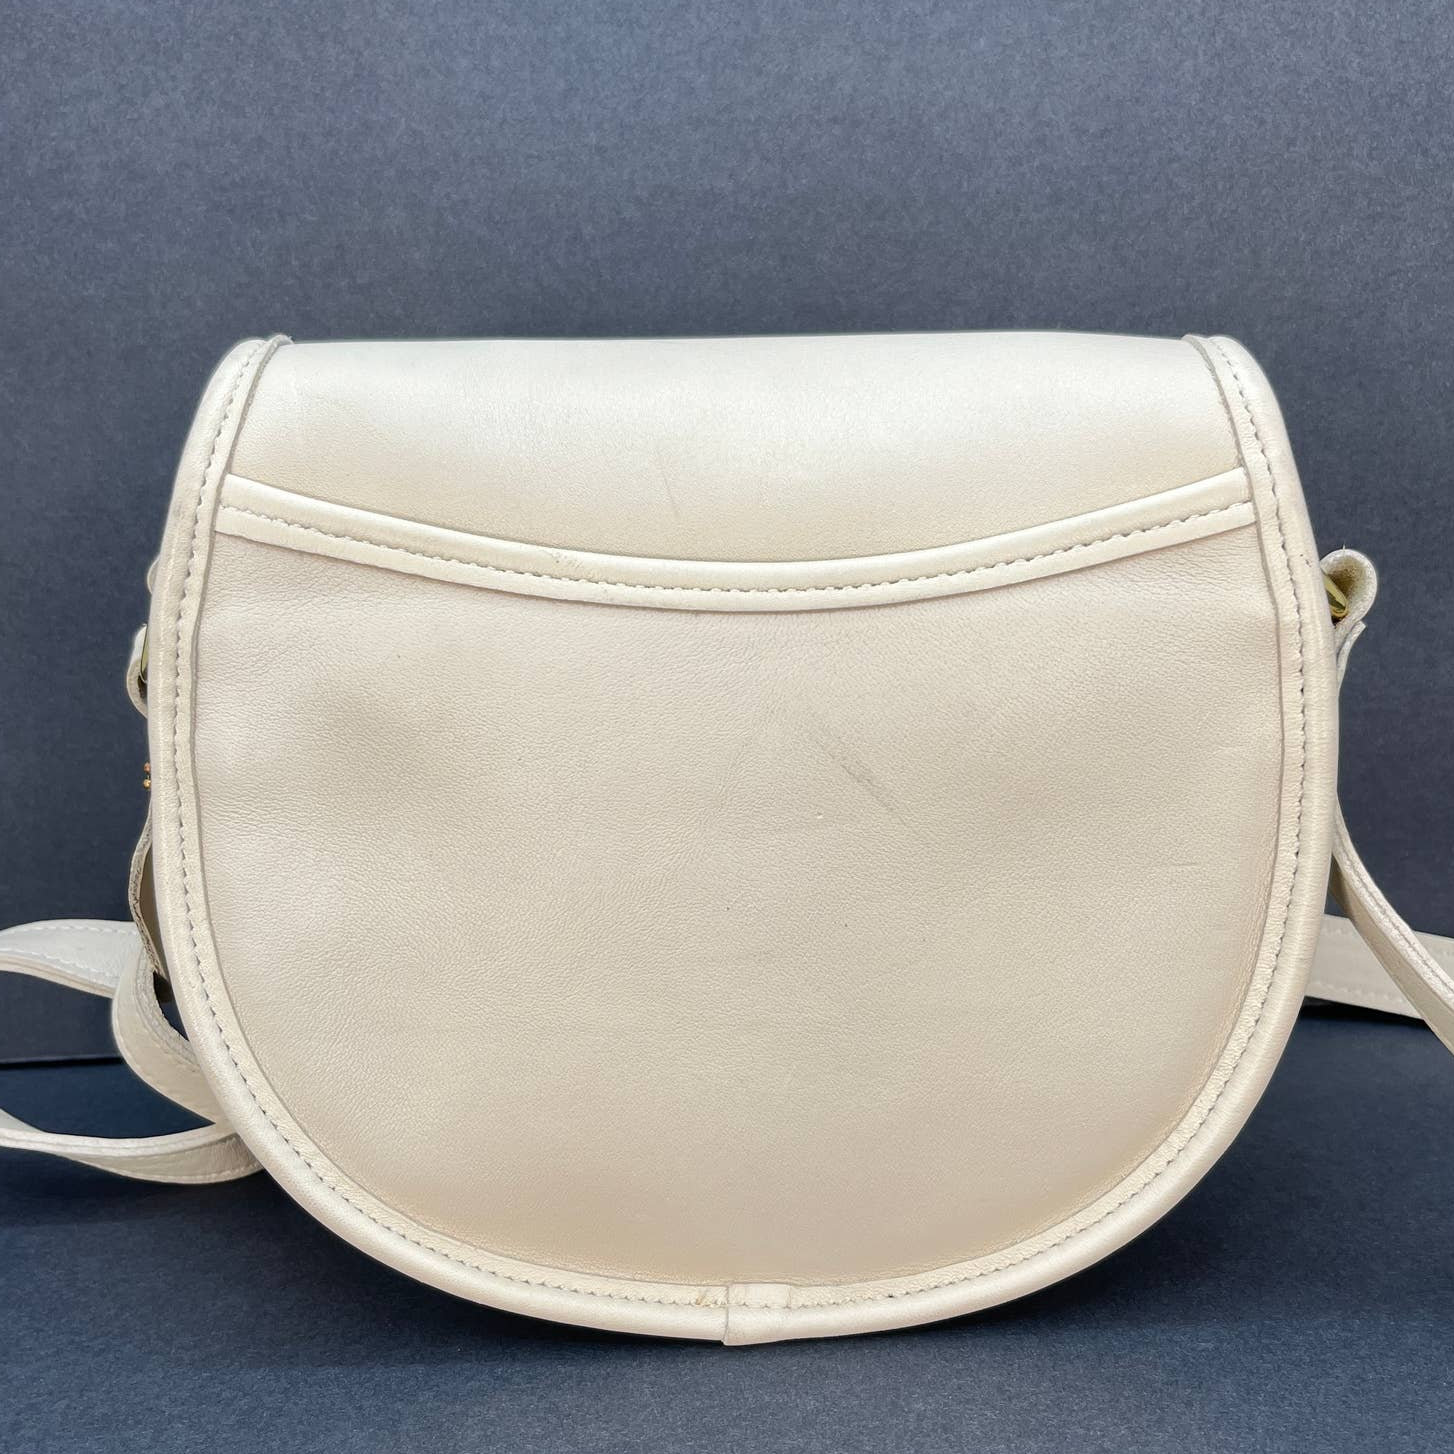 COACH Vintage Watson Bag Leather Crossbody Handbag 9981 Bottle Green